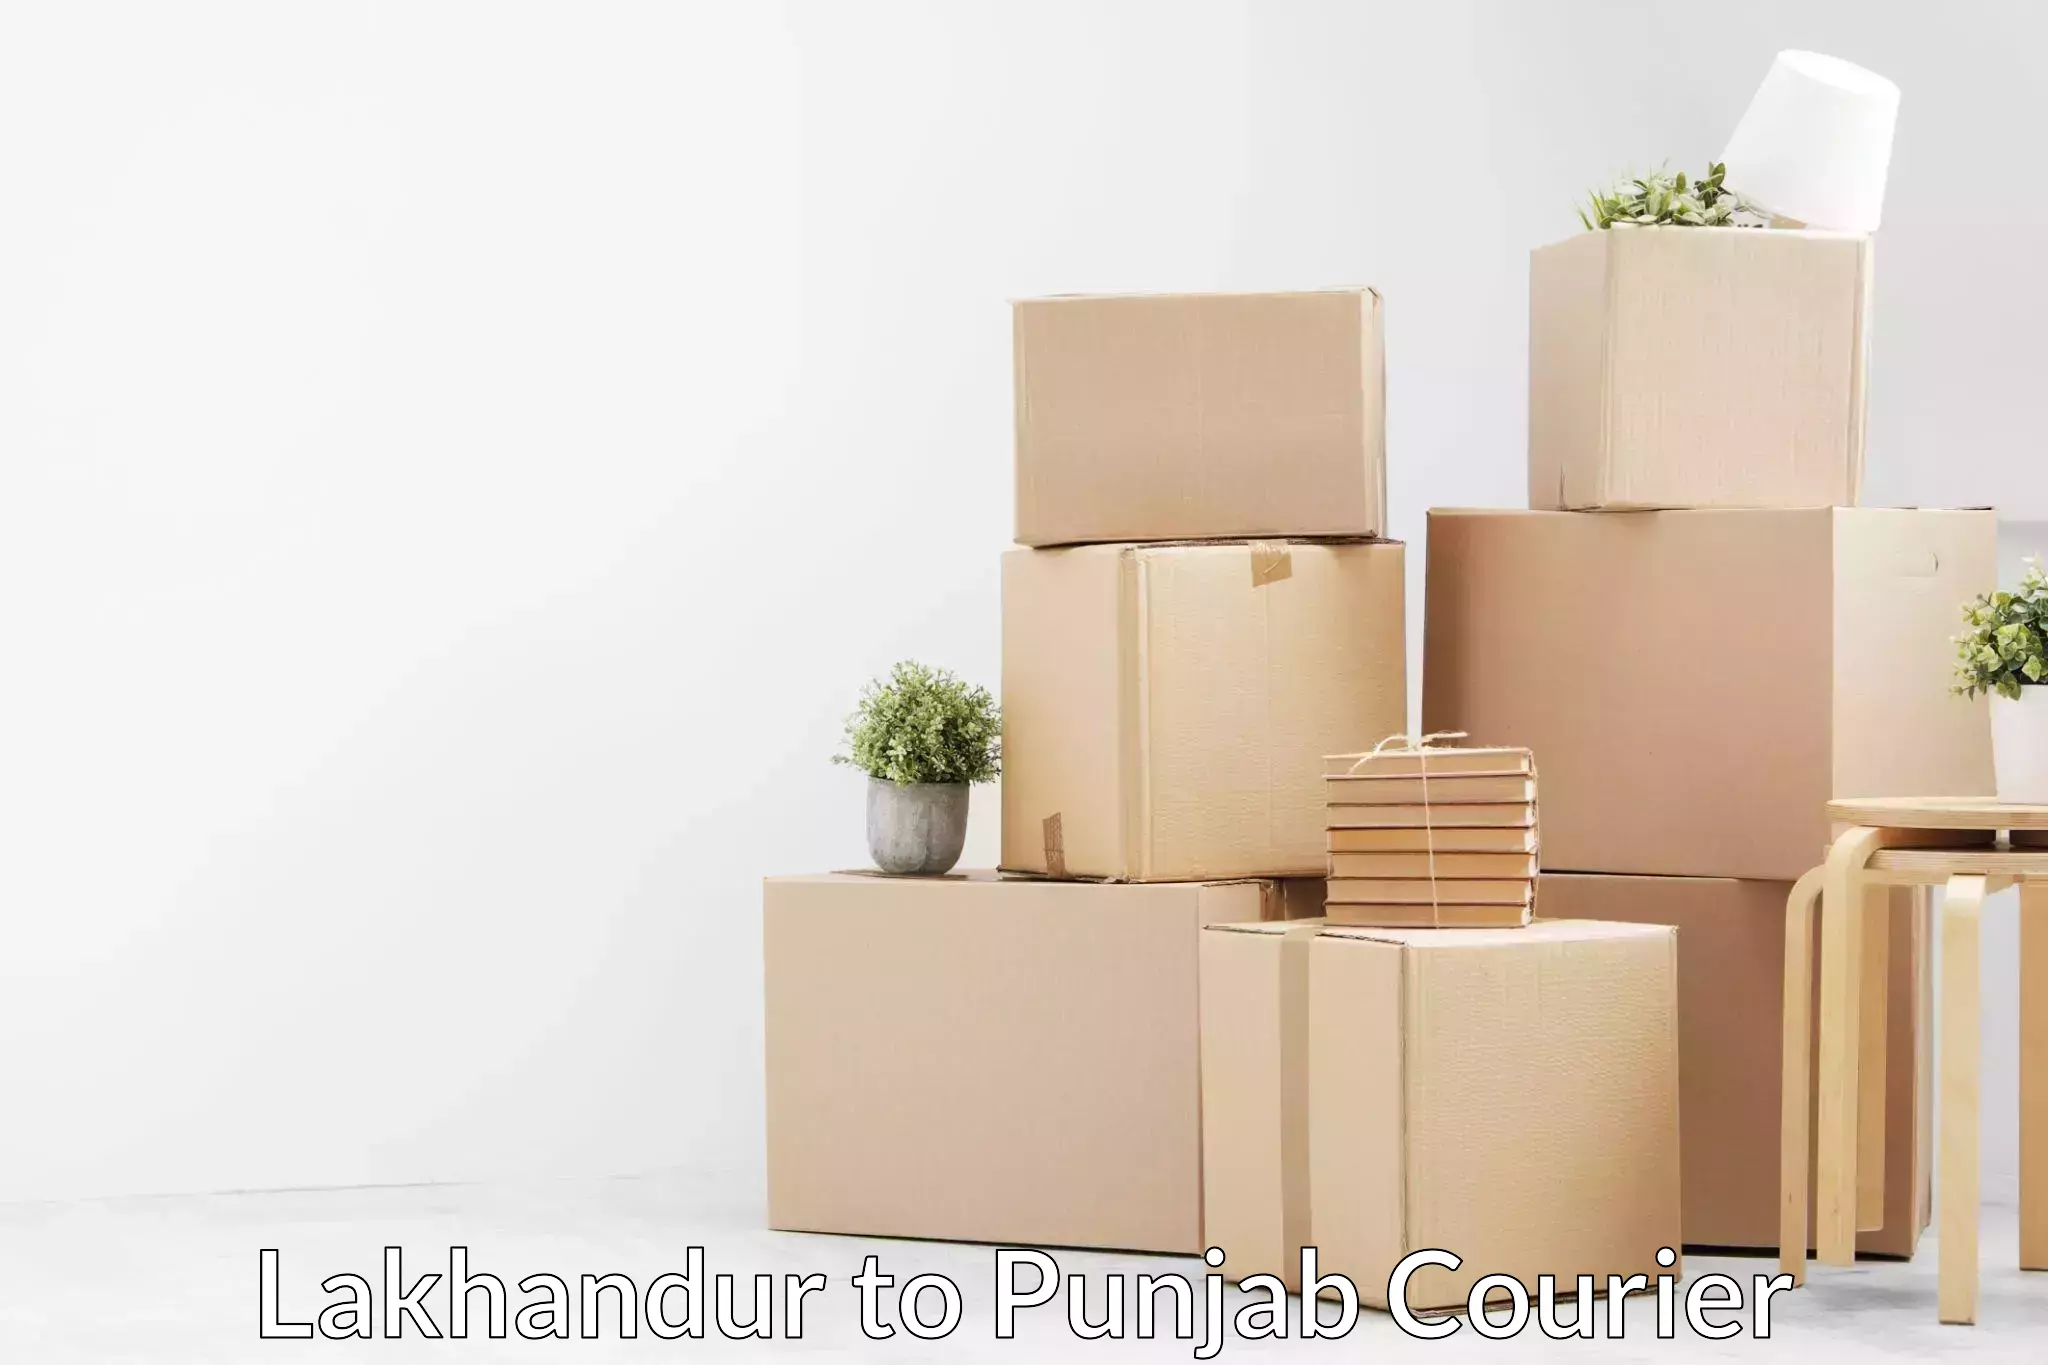 Cost-effective moving options Lakhandur to Punjab